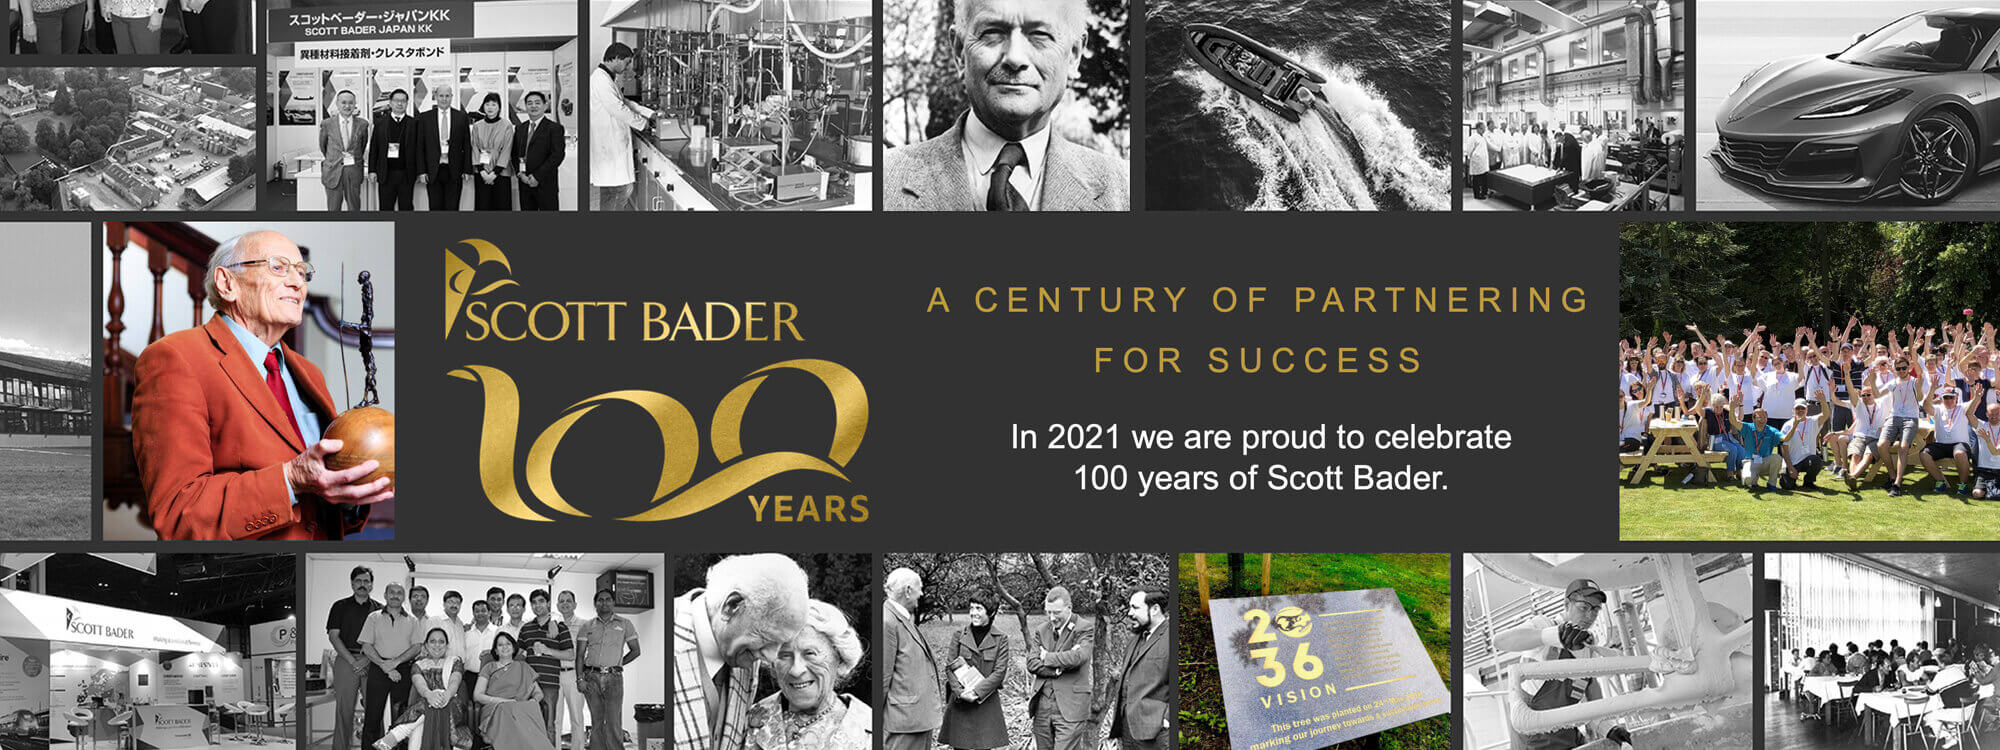 We celebrate Scott Bader’s 100th birthday this month